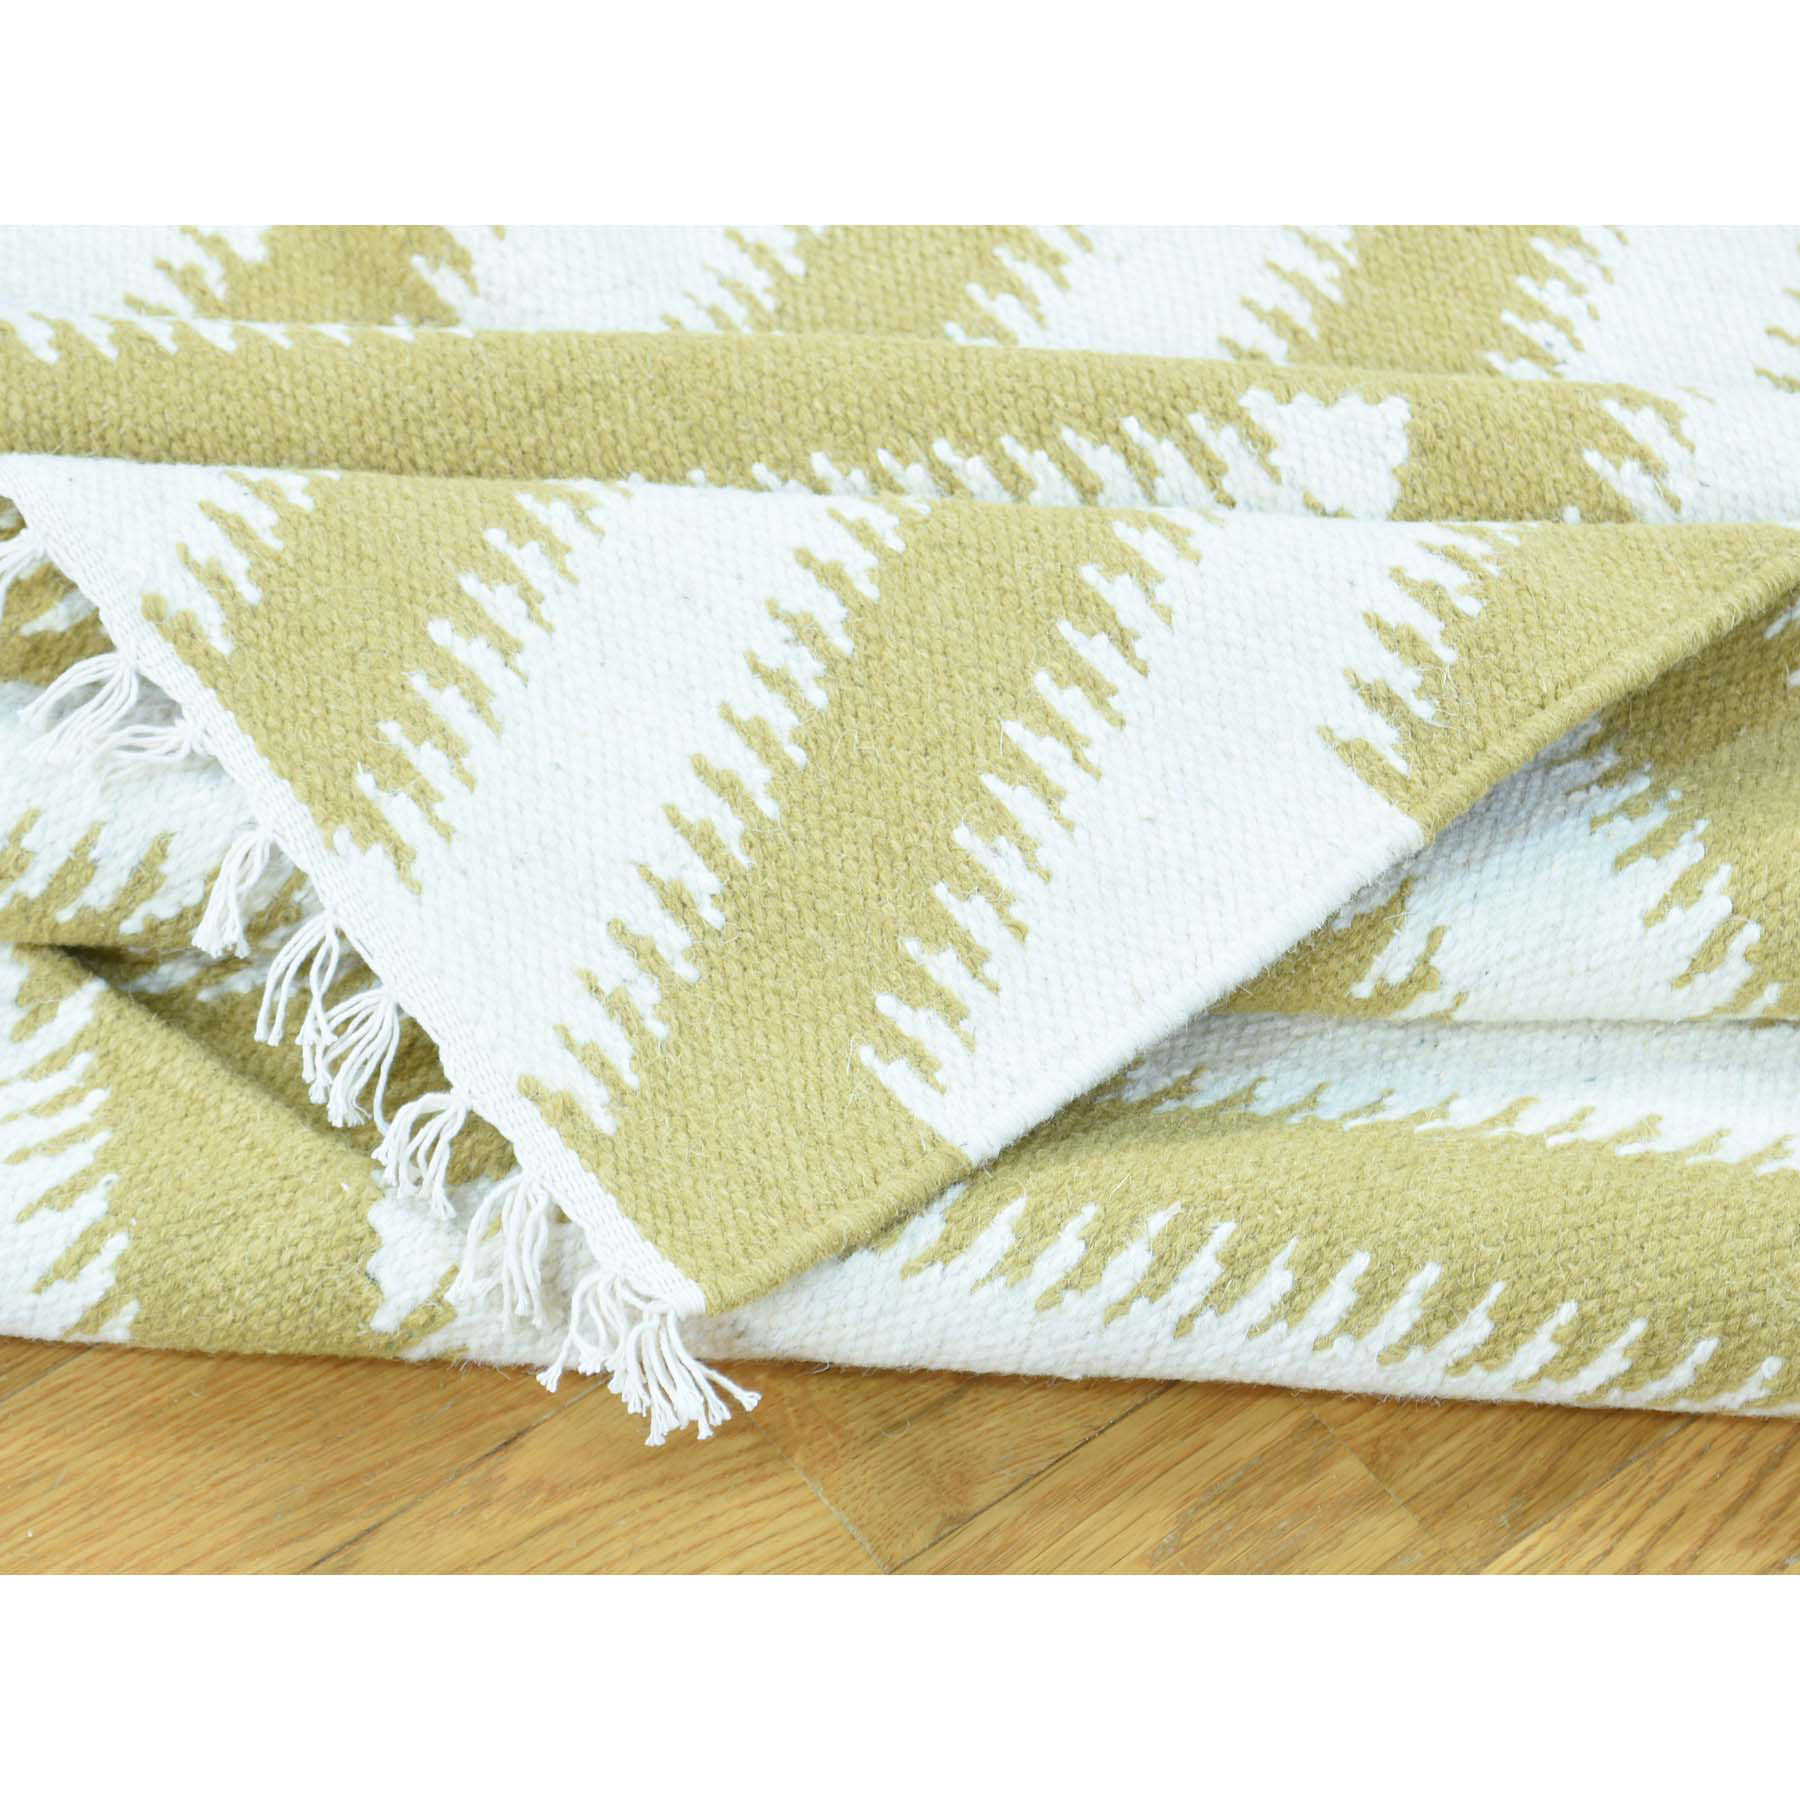 5'x8' Hand-Woven Chevron Design Kilim Flat Weave 100 Percent Wool Rug 